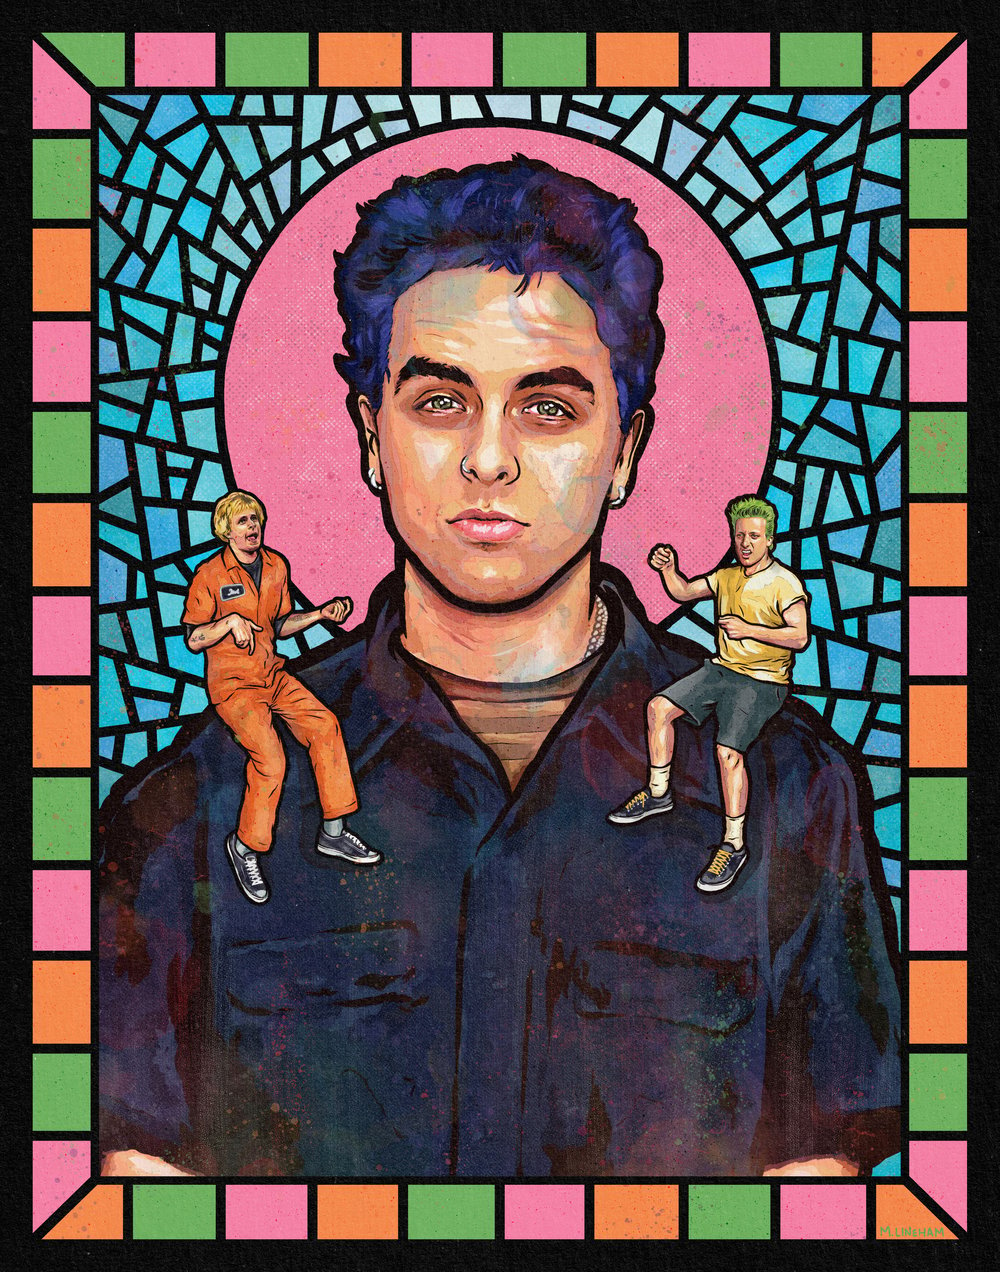 Saint Billie Joe (Green Day) – 8x10